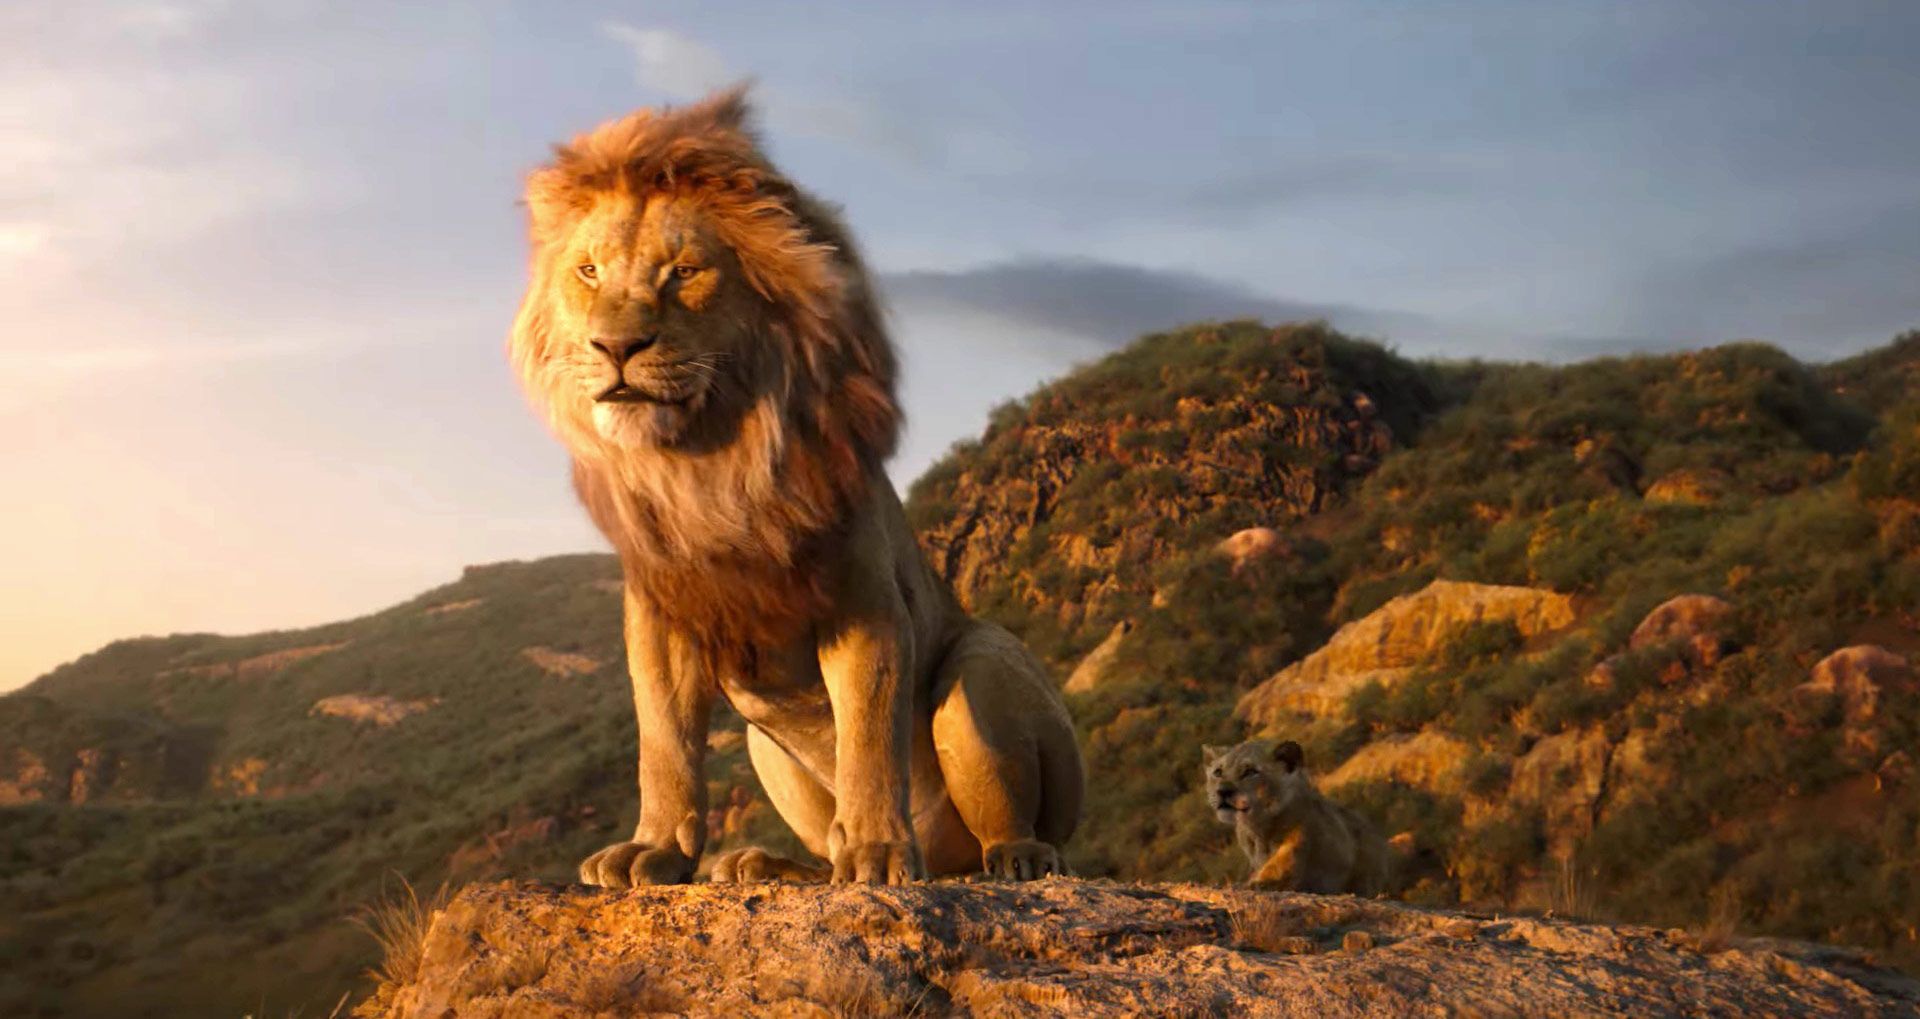 watch online lion king 2 full movie